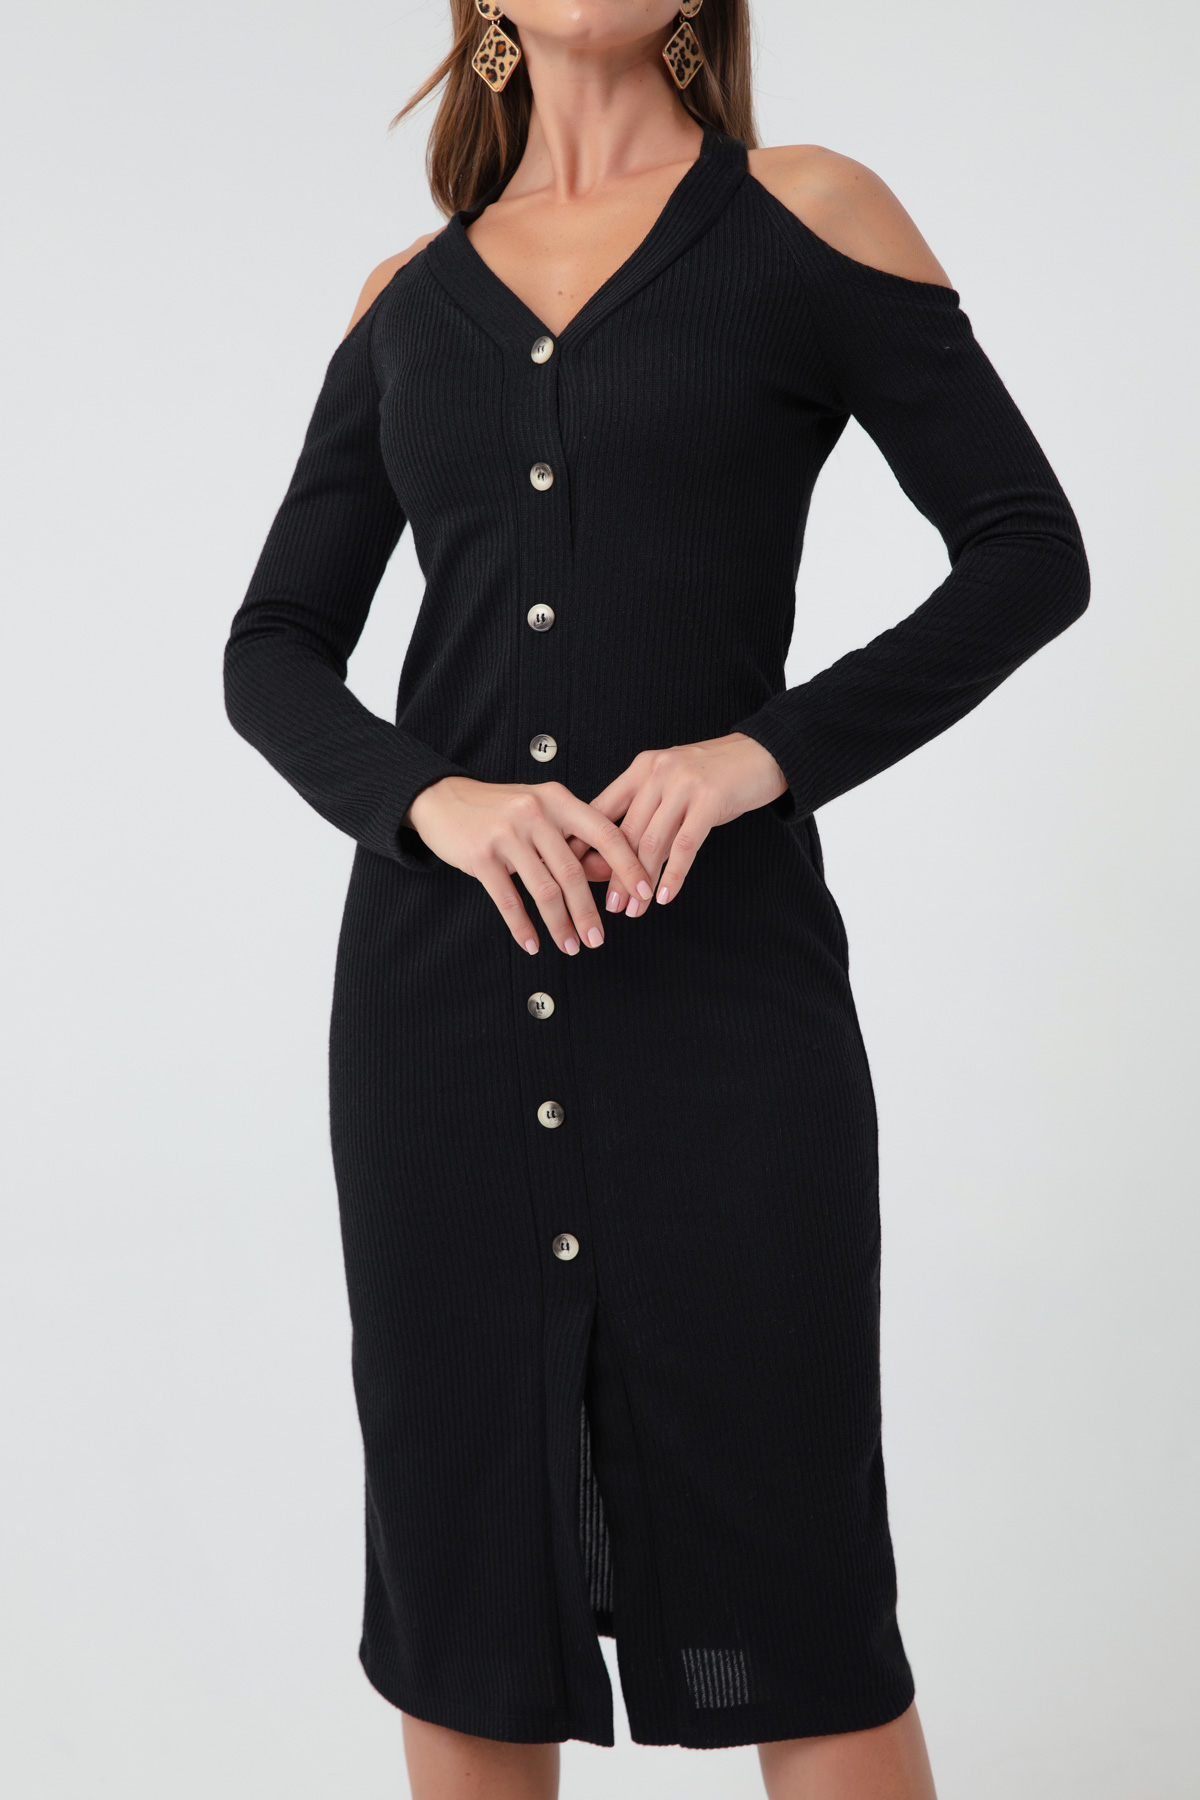 Women's Black Knitted Dress